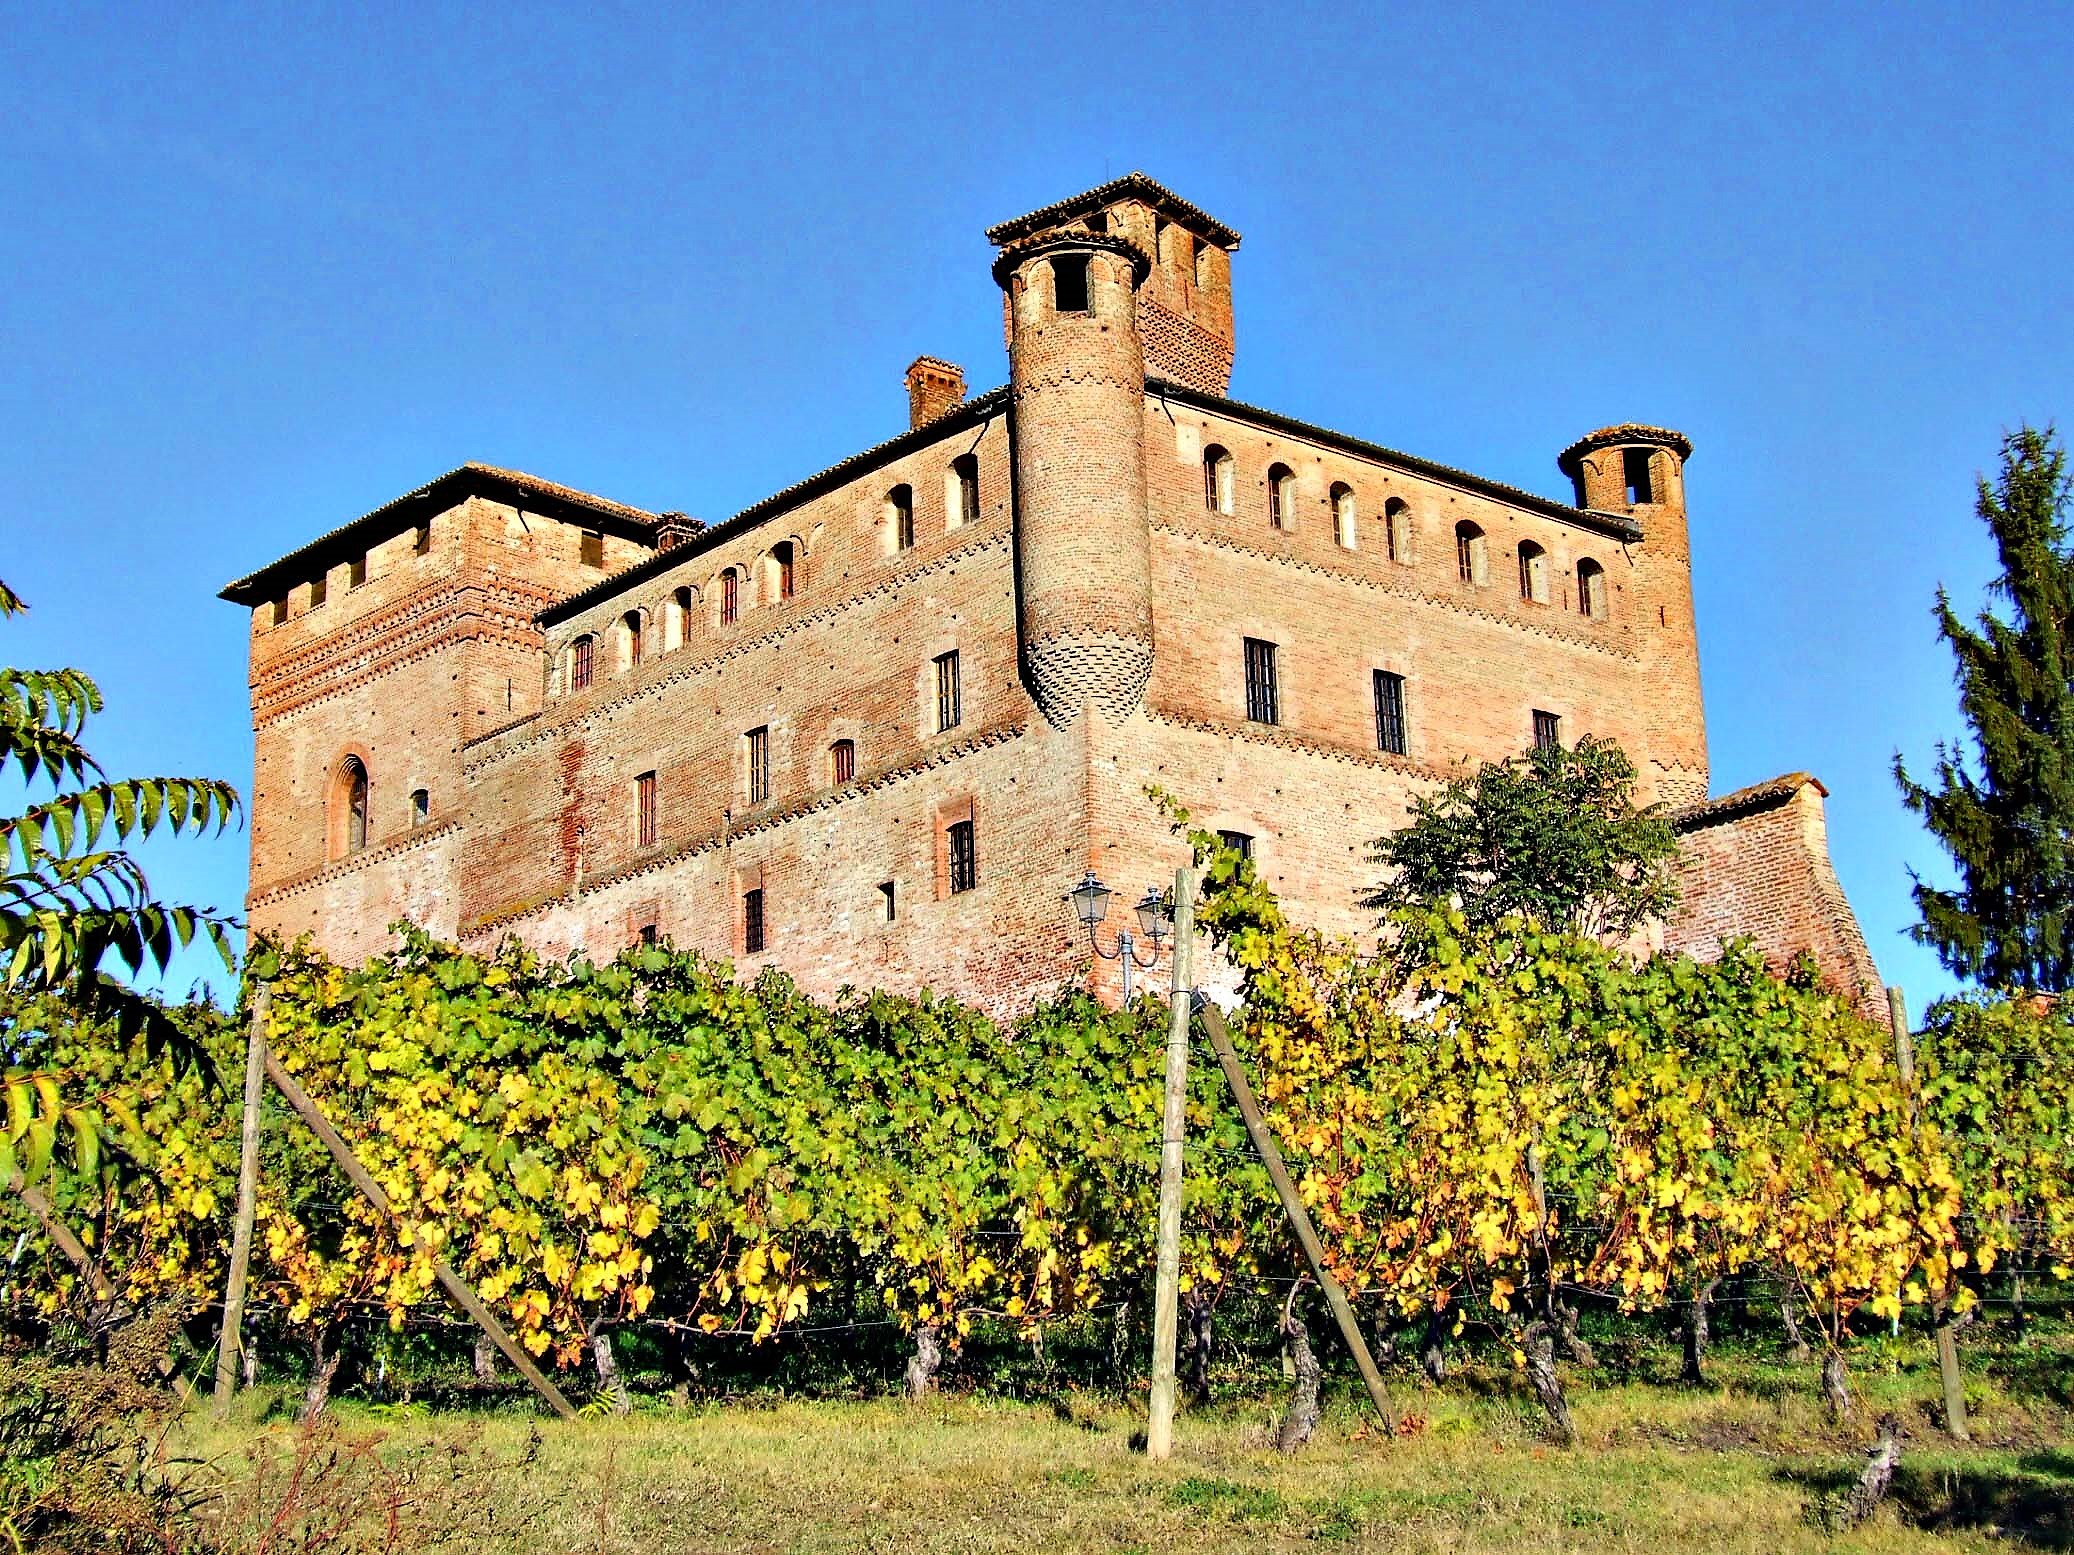 Das imposante Castello di Grinzane Cavour bei Alba